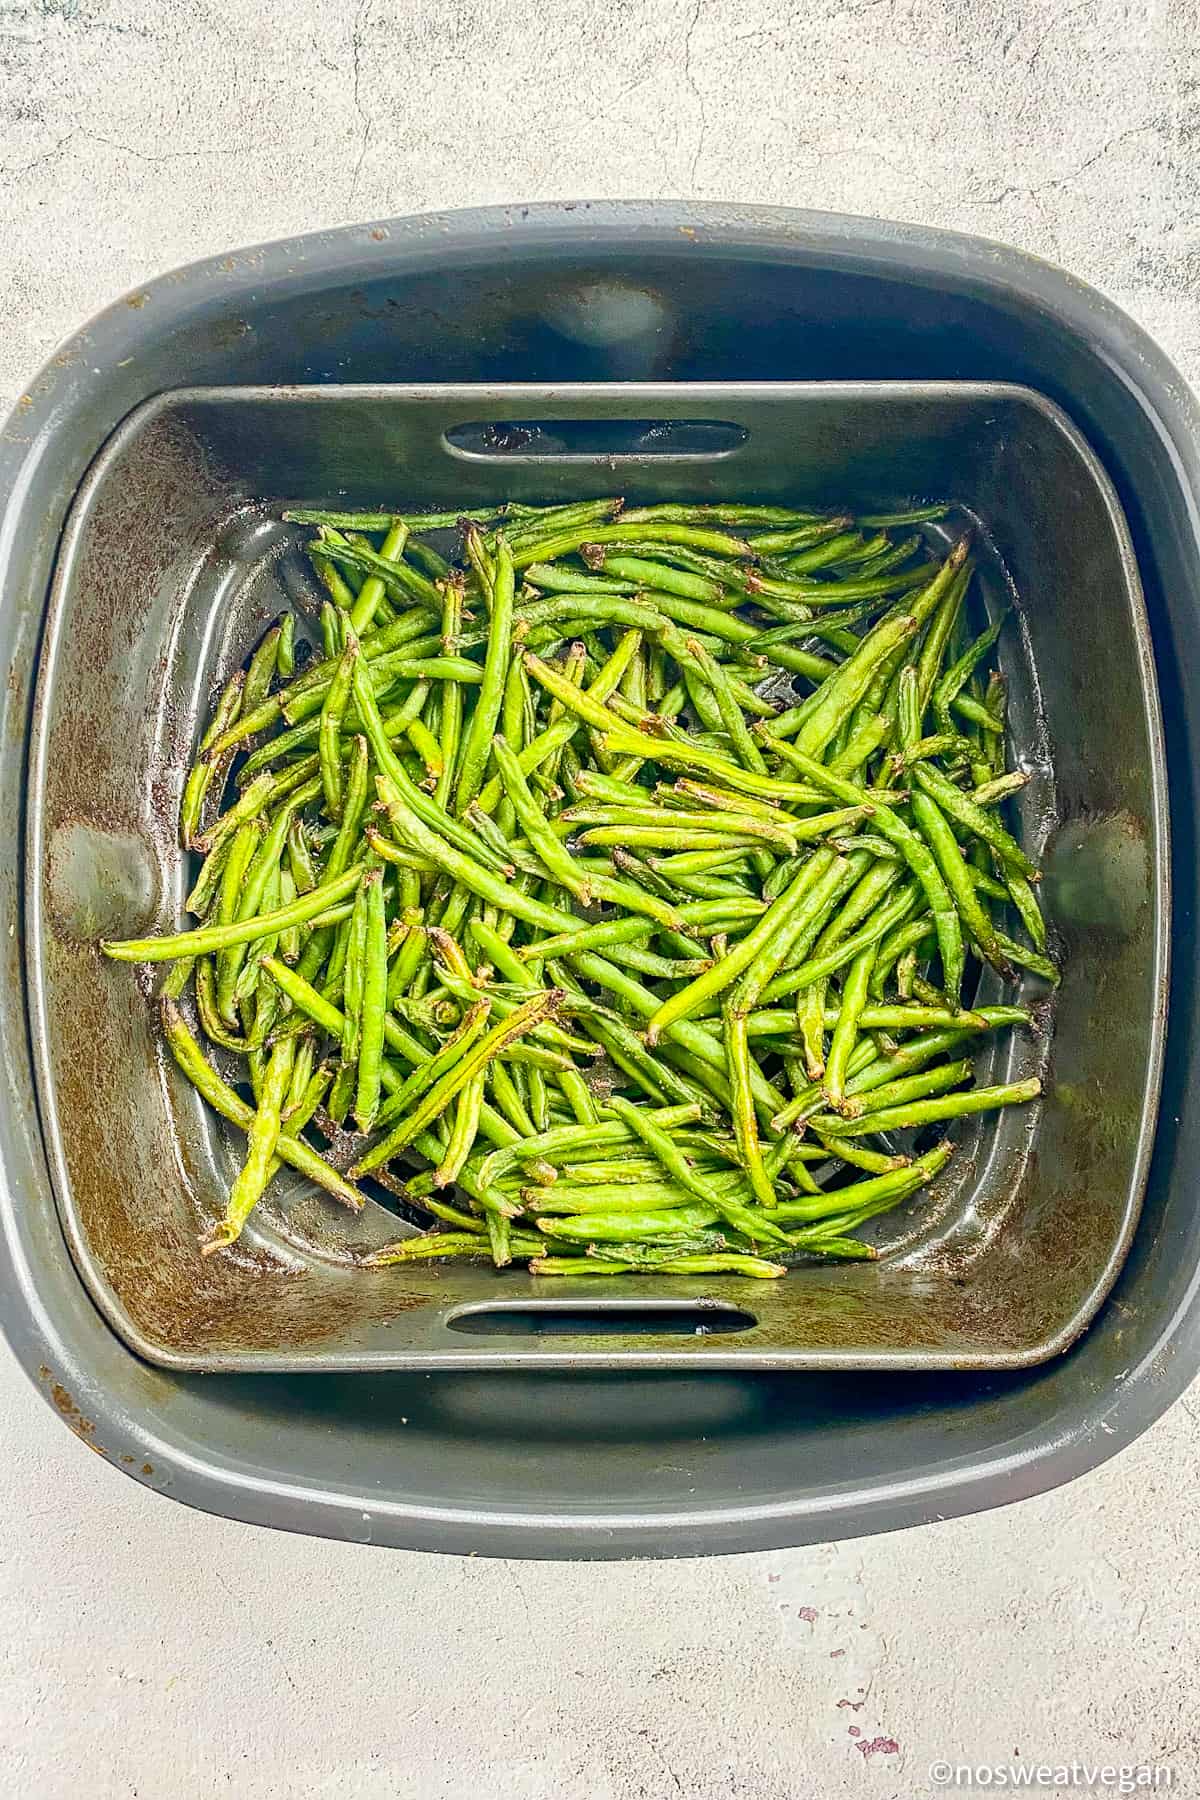 Frozen green beans roasted in air fryer.